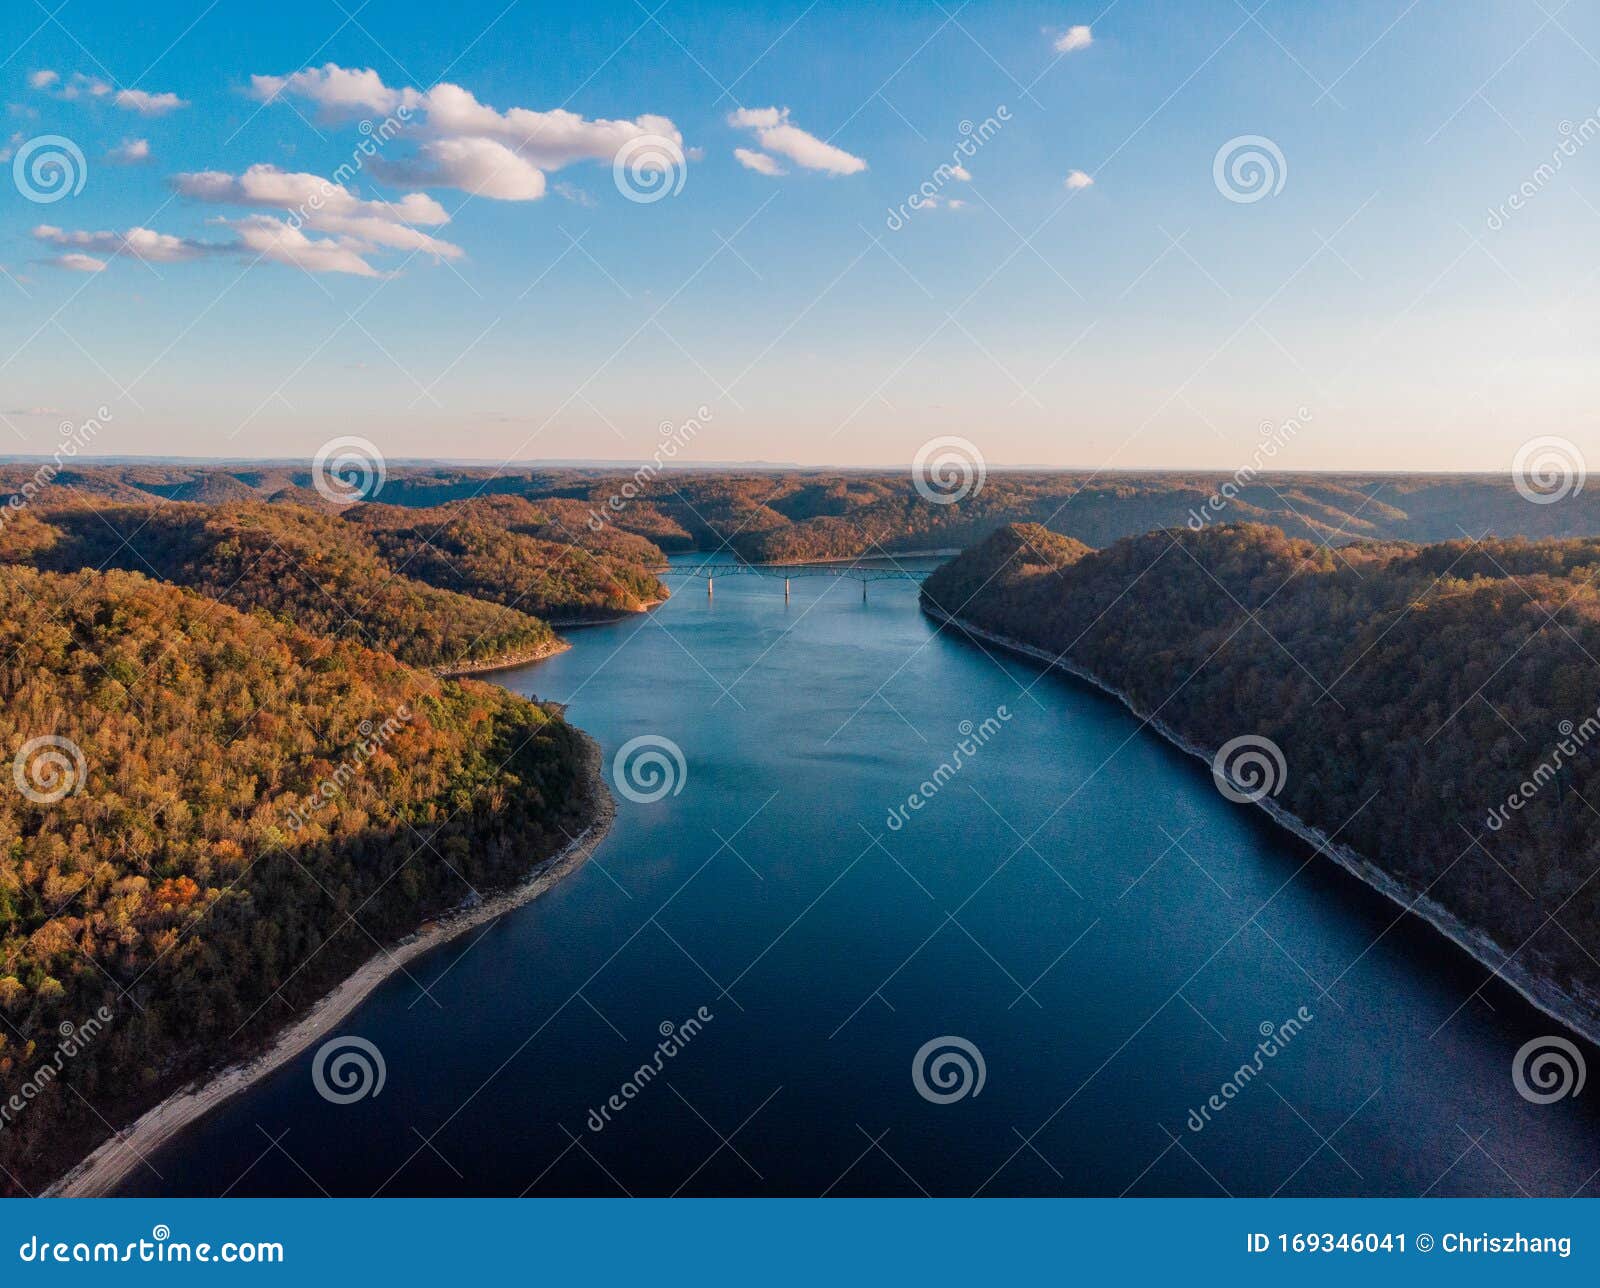 autumn forests bridge and river overlook by drone dji mavic mini